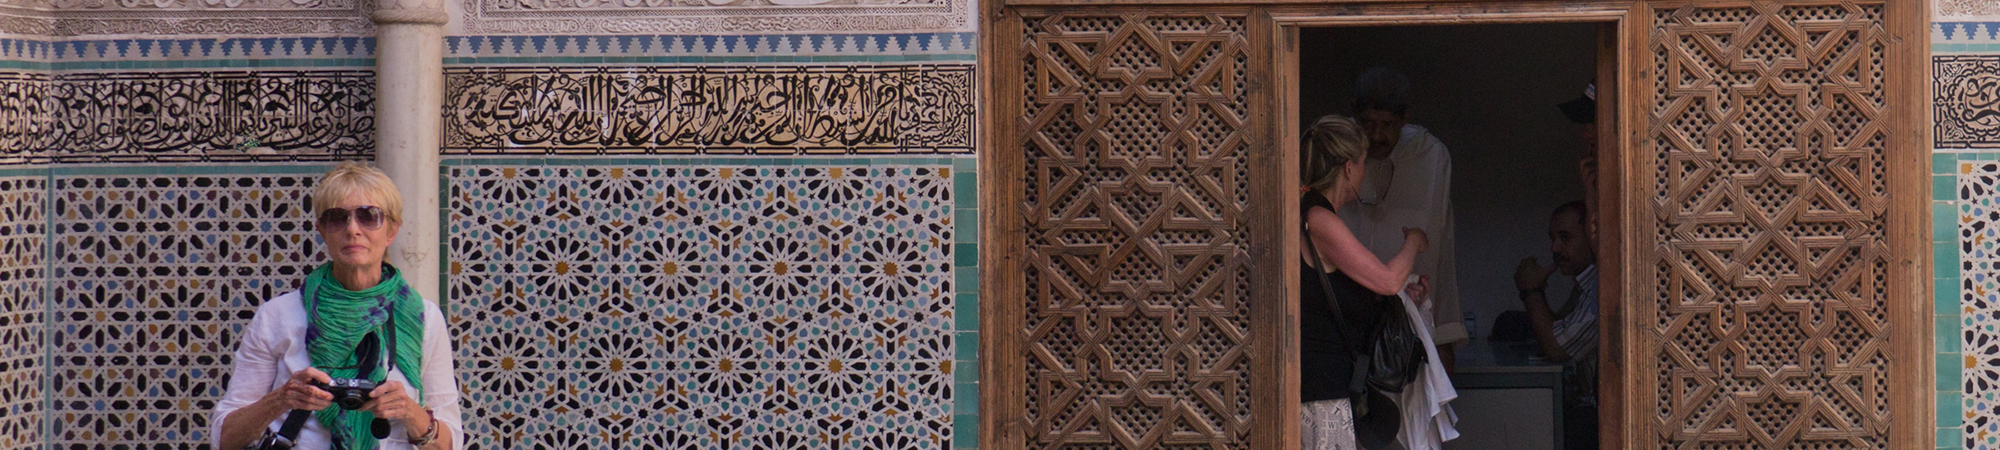 tile art in morocco